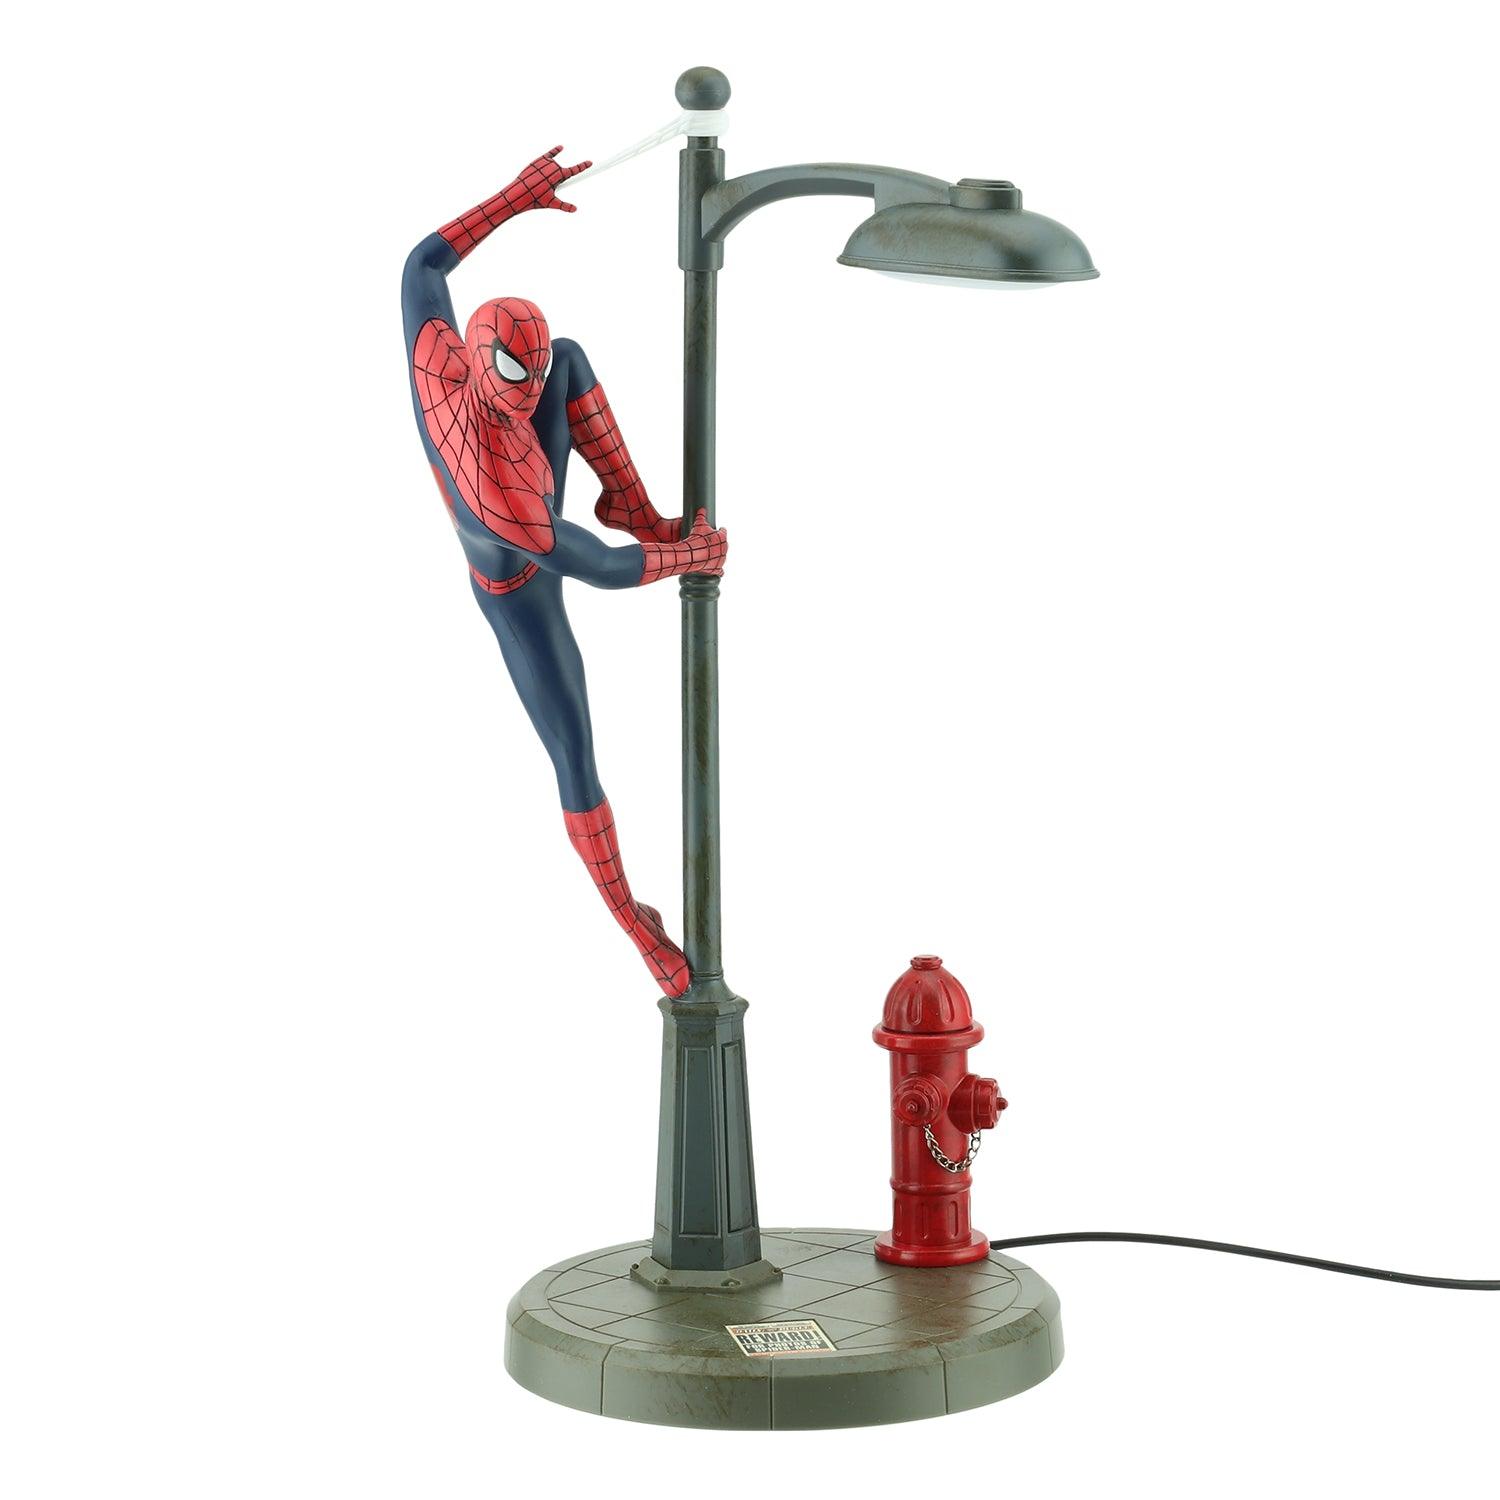 Bad breng de actie Druipend Marvel Spider-Man Lamp | Science Museum Shop